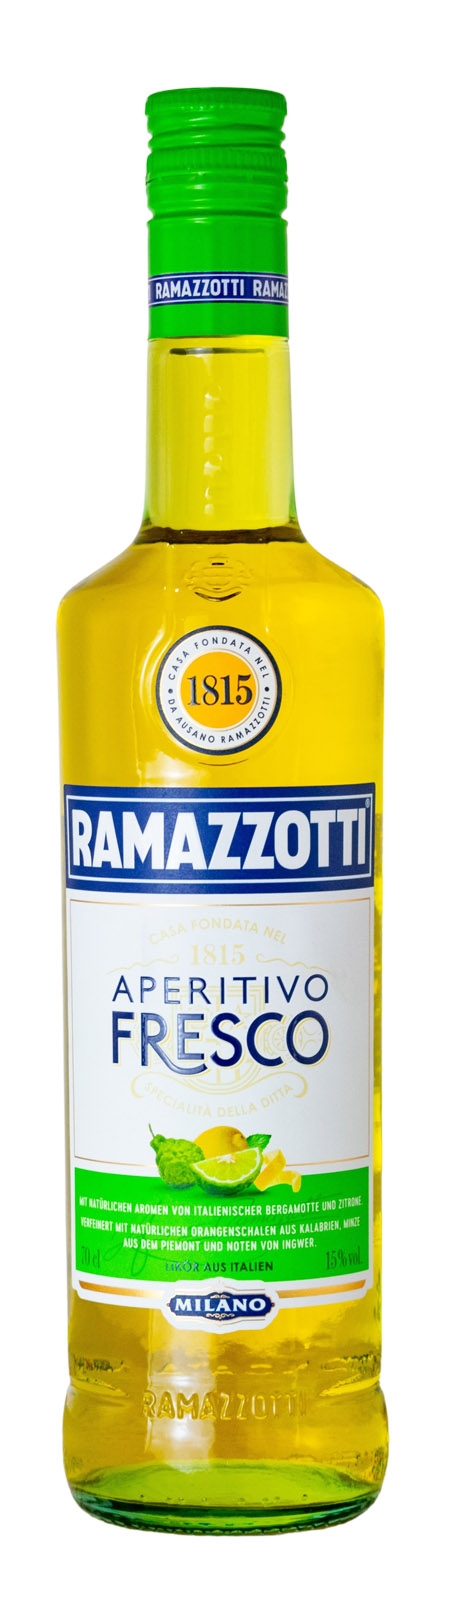 Ramazzotti Aperitivo Fresco günstig kaufen | Likör